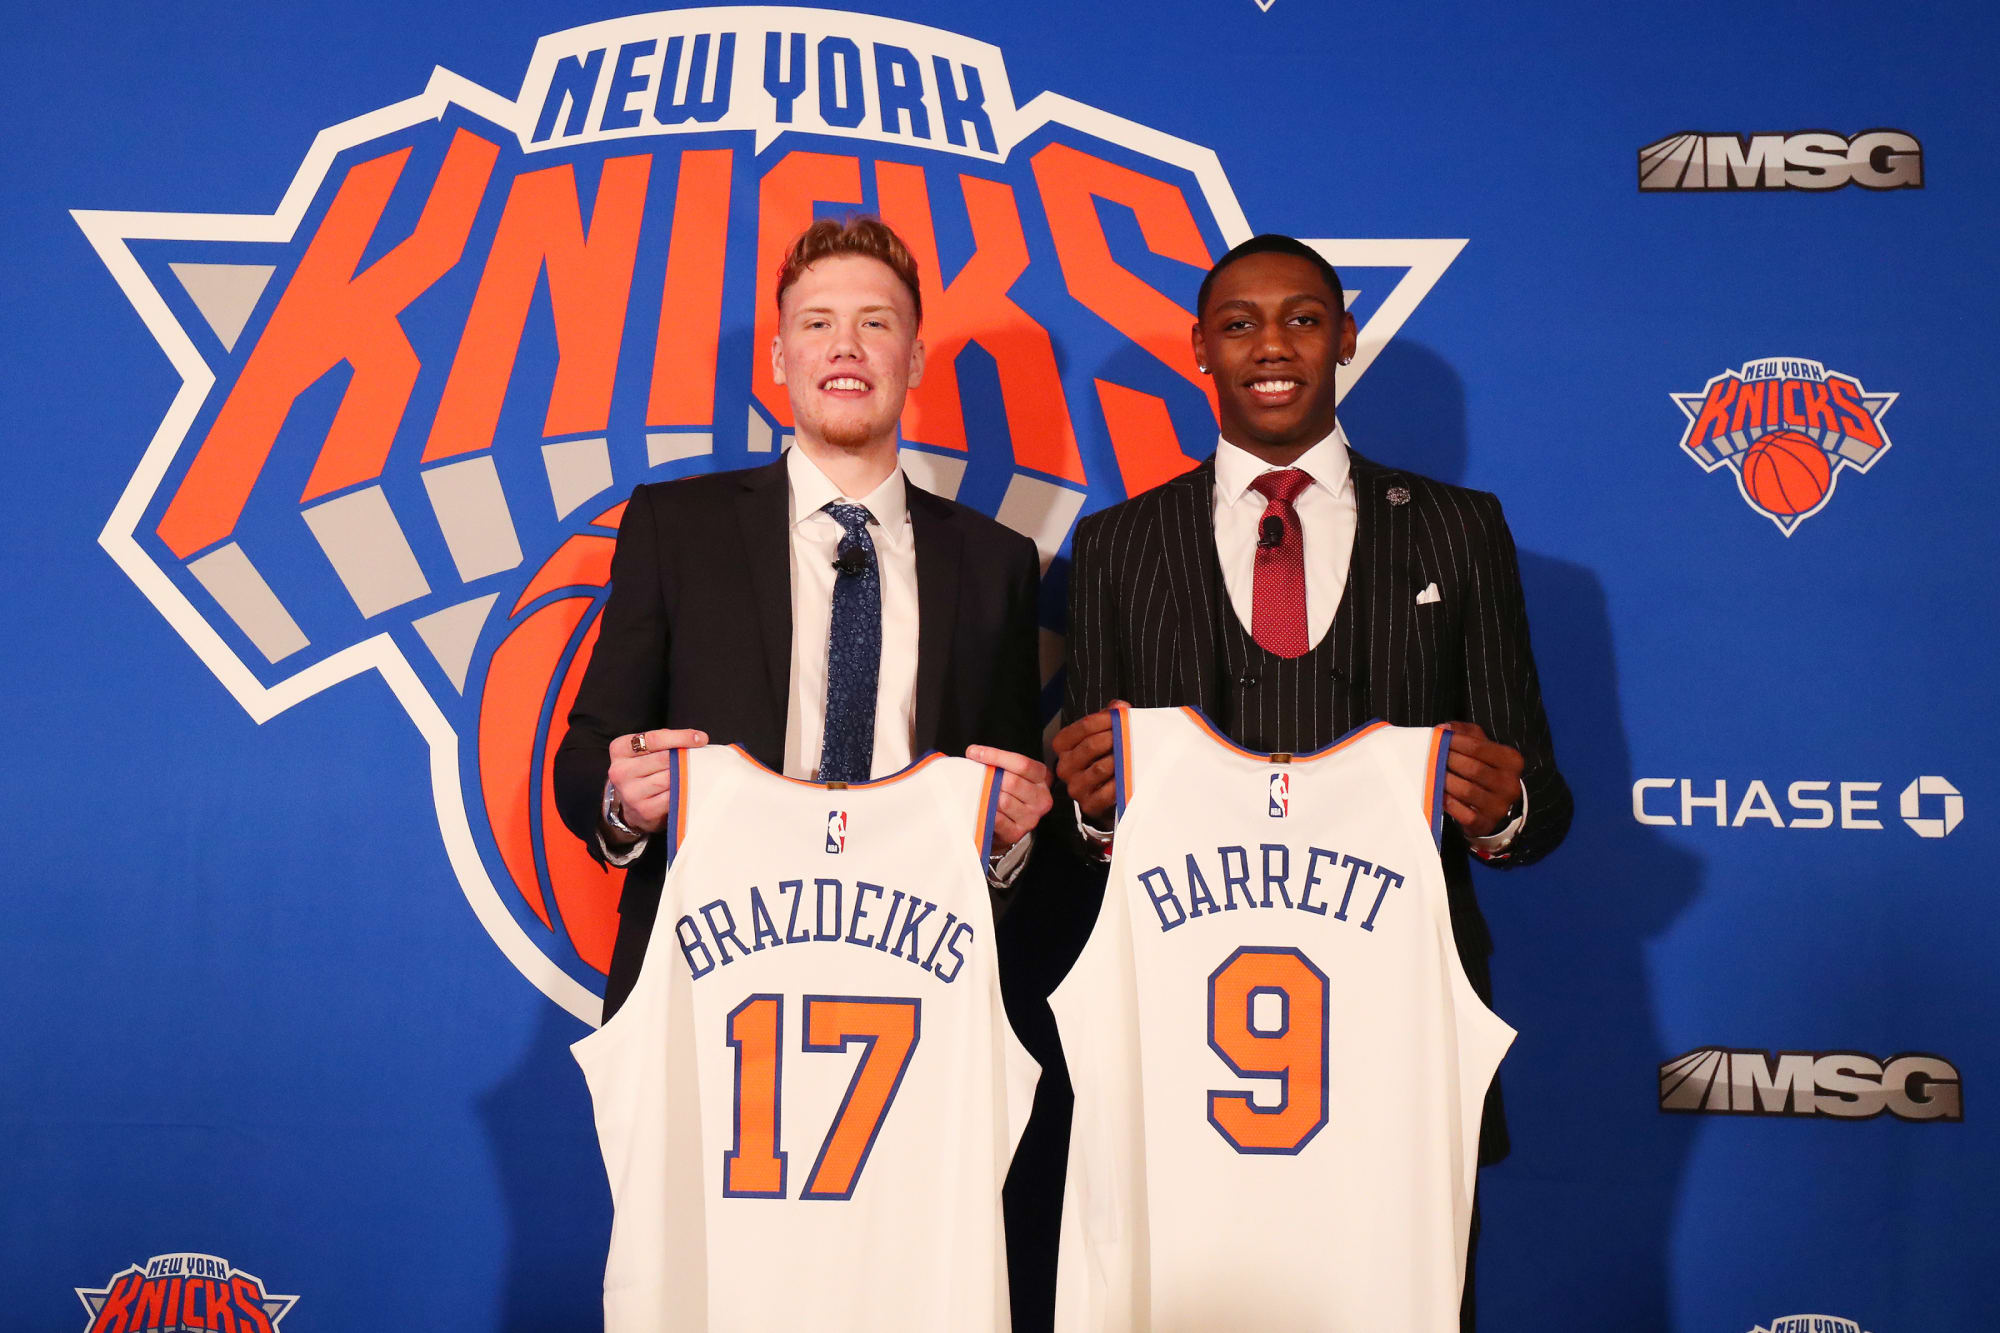 RJ Barrett & Ignas Brazdeikis' First Day as New York Knicks Photo